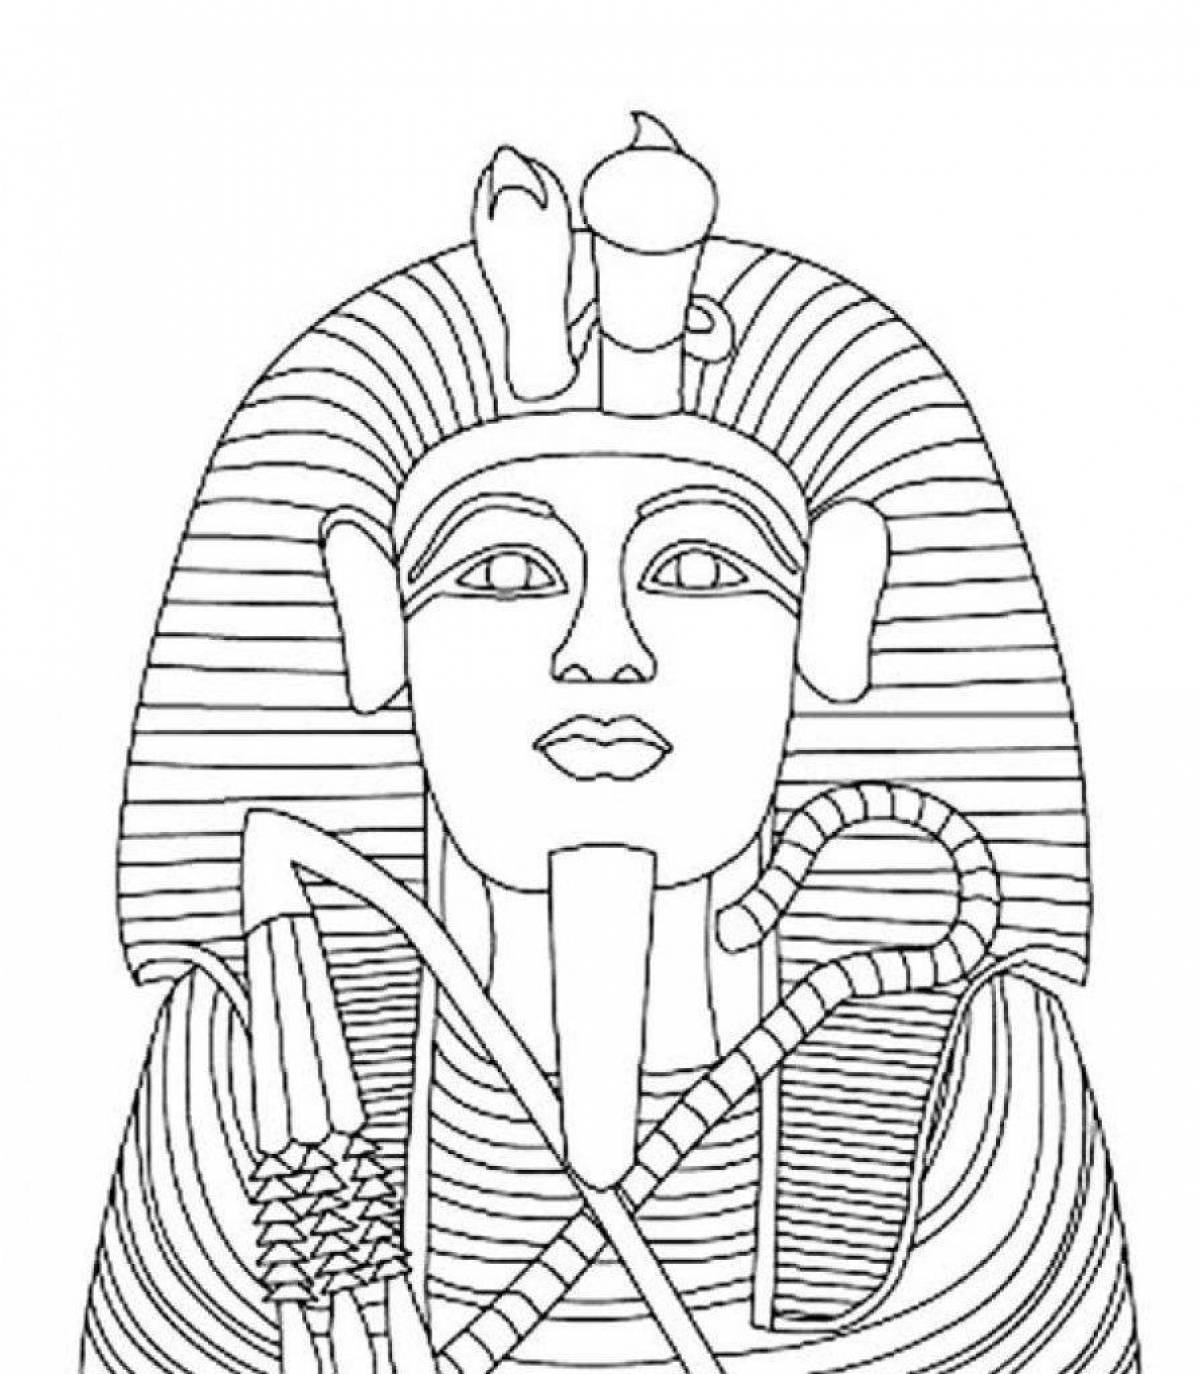 Coloring page mask of the great pharaoh Tutankhamun